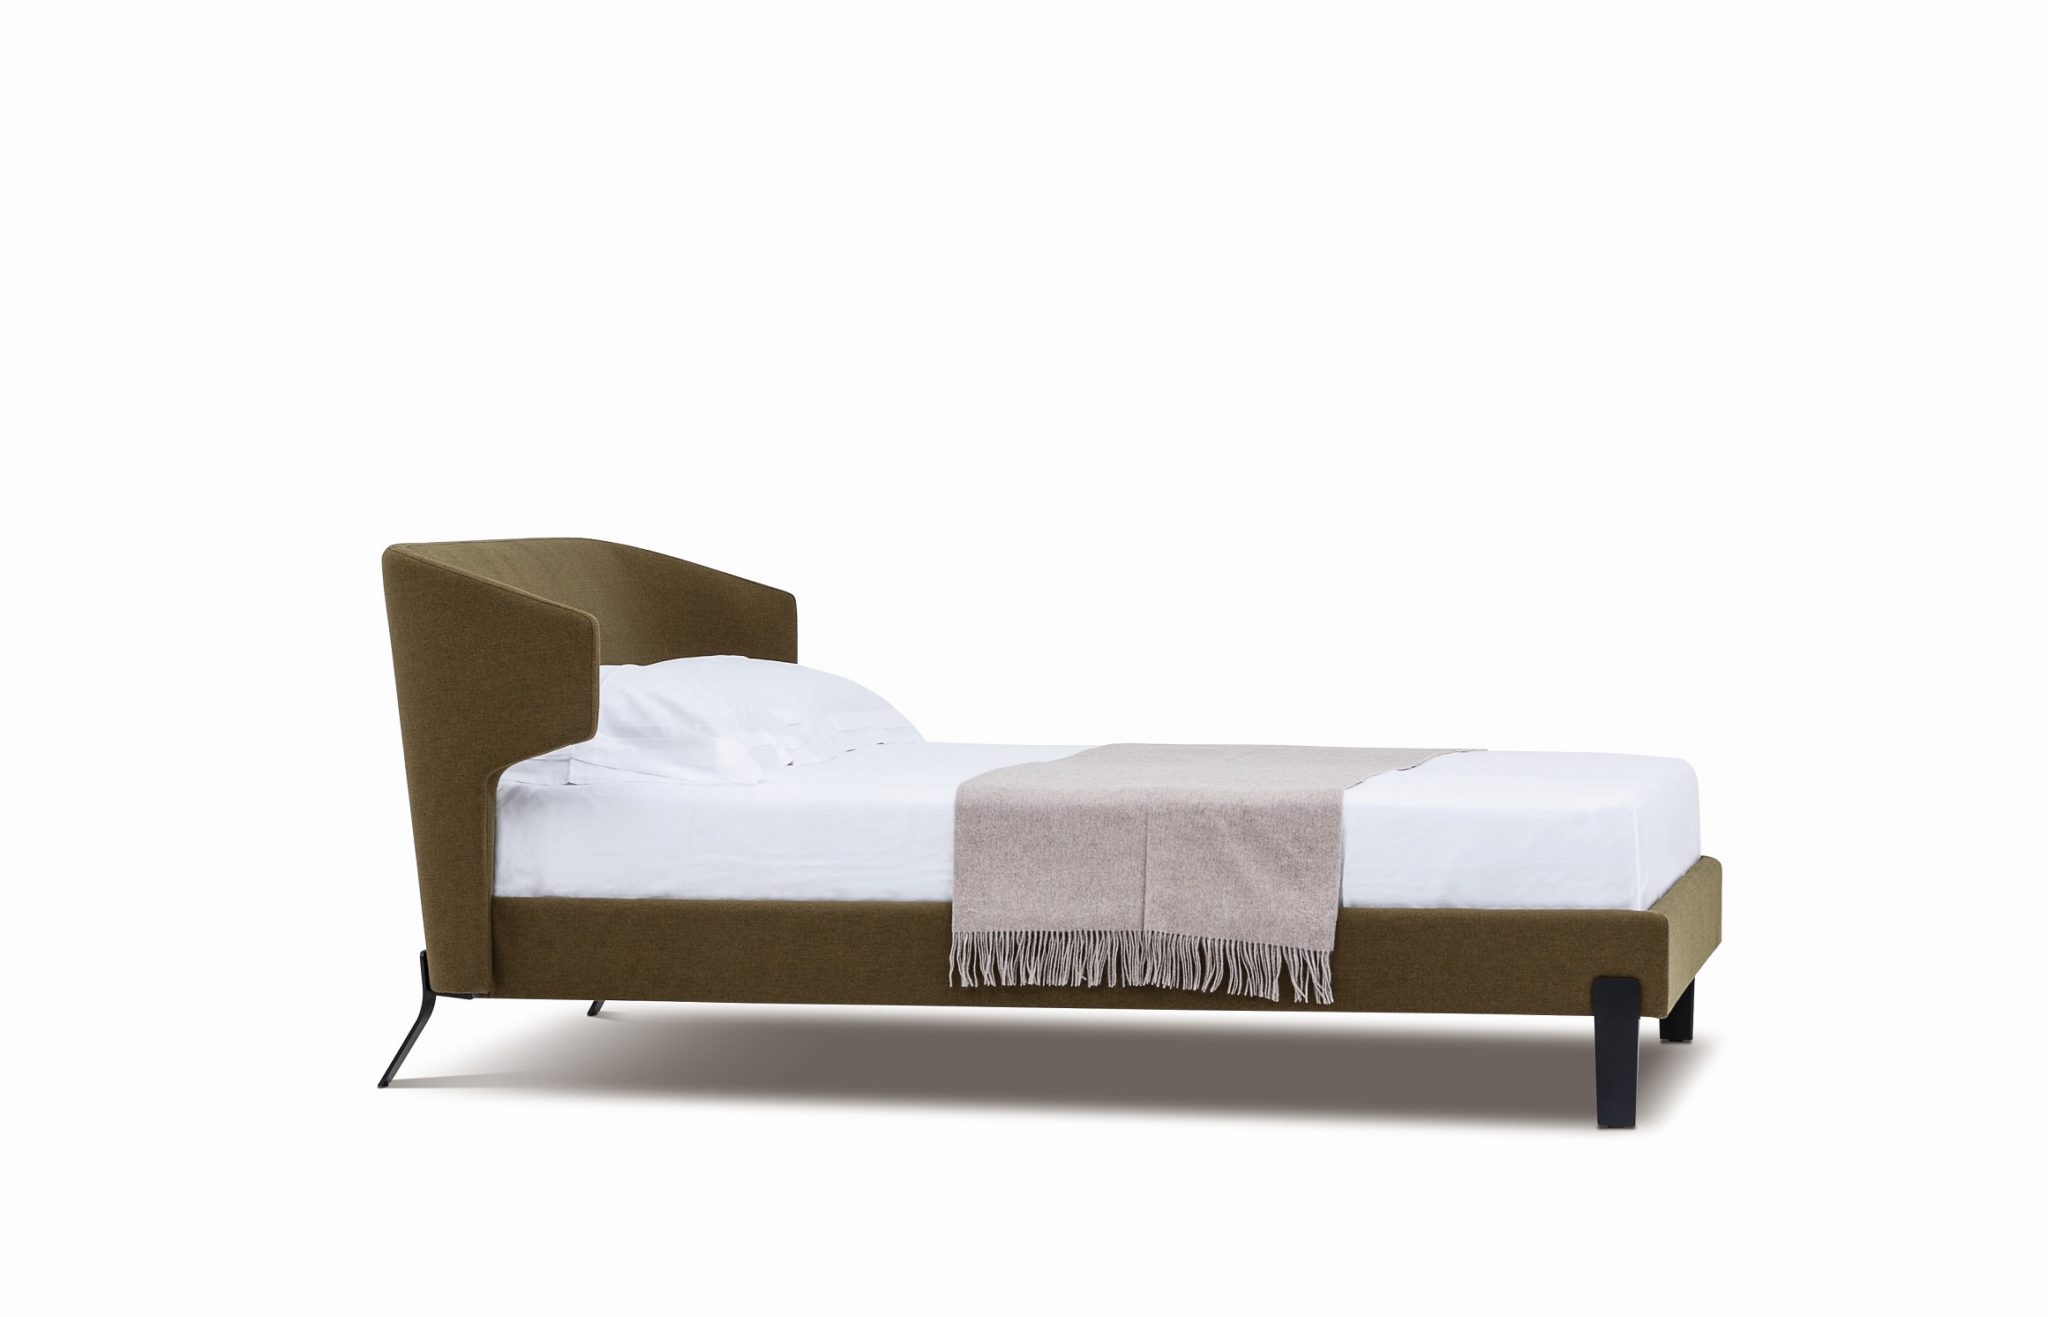 knickerbocker embrace wraparound bed frame